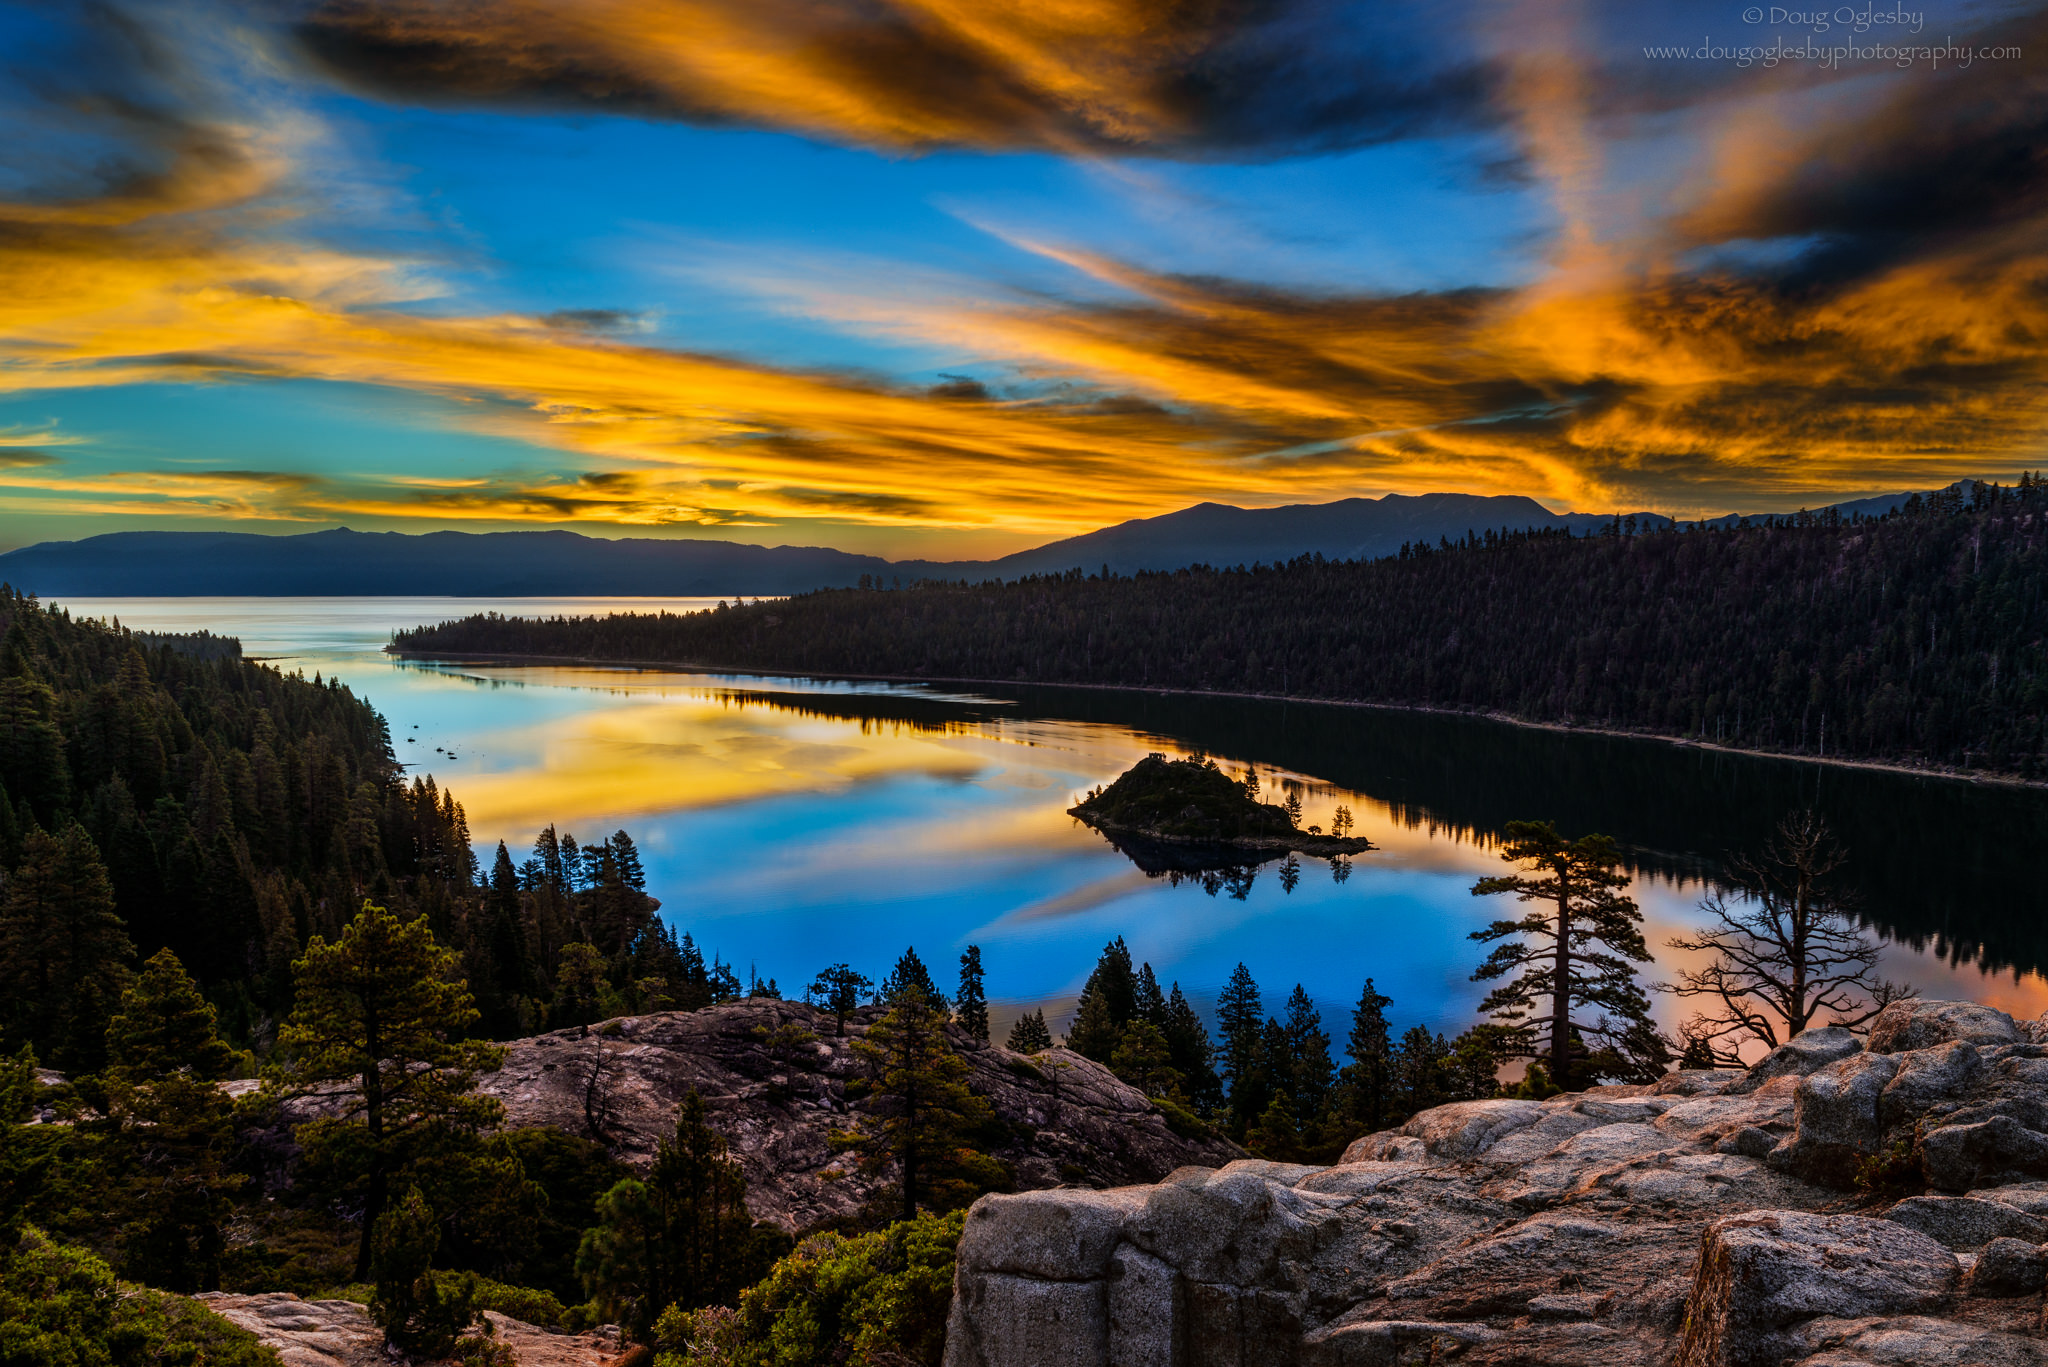 Emerald-Bays-Fannette-Island.-Lake-Tahoe-Nevada.-Photograph-by-Doug-Oglesby.-photo@dougoglesby.com_.-A-PHOTOGRAPHY-WORLD-Article-Beautiful-Lake-Tahoe-@-photographyworld.org_.jpg